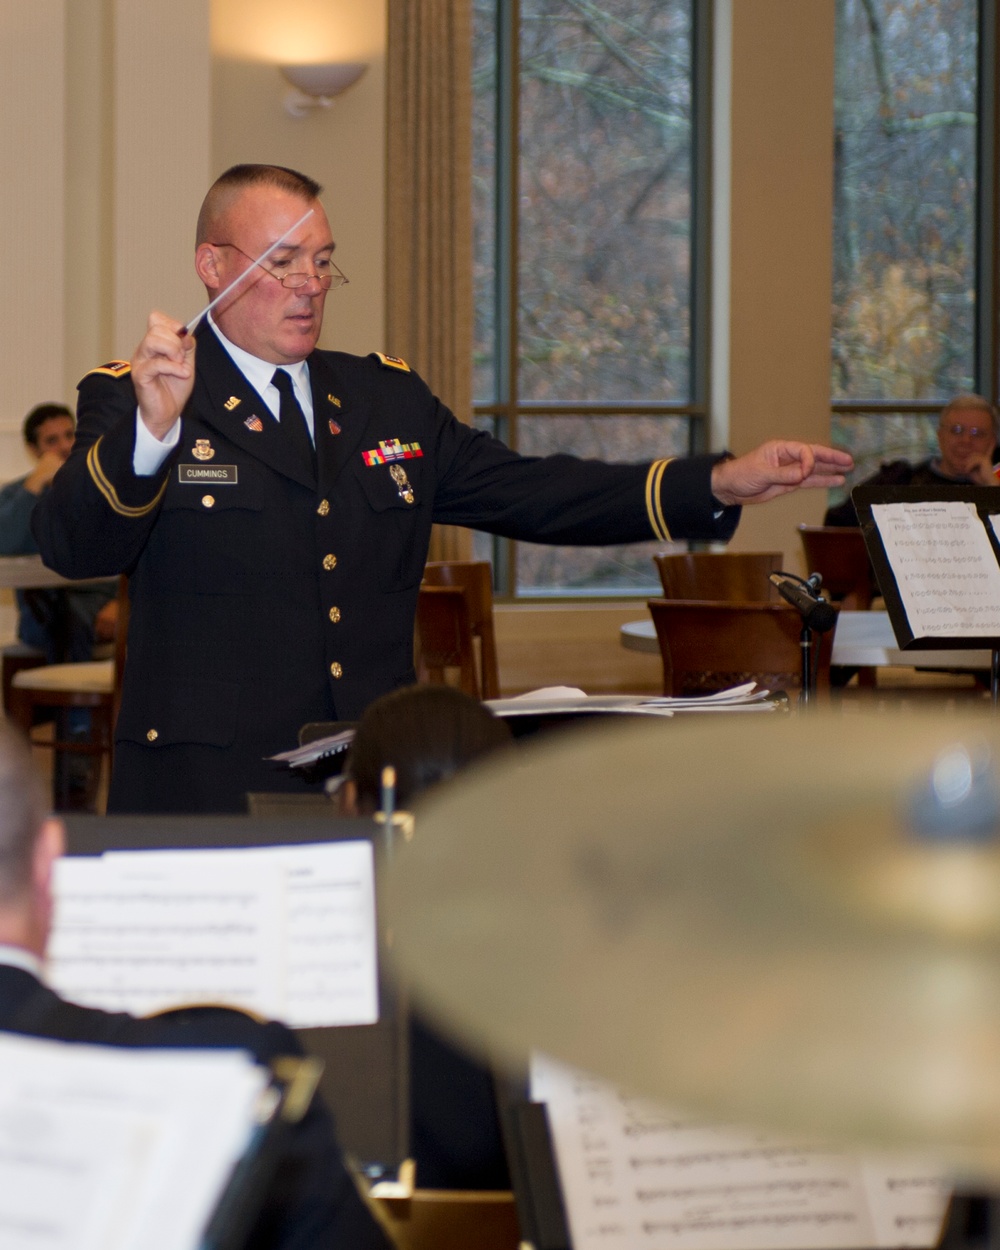 Georgia National Guard Band spreads cheer through music